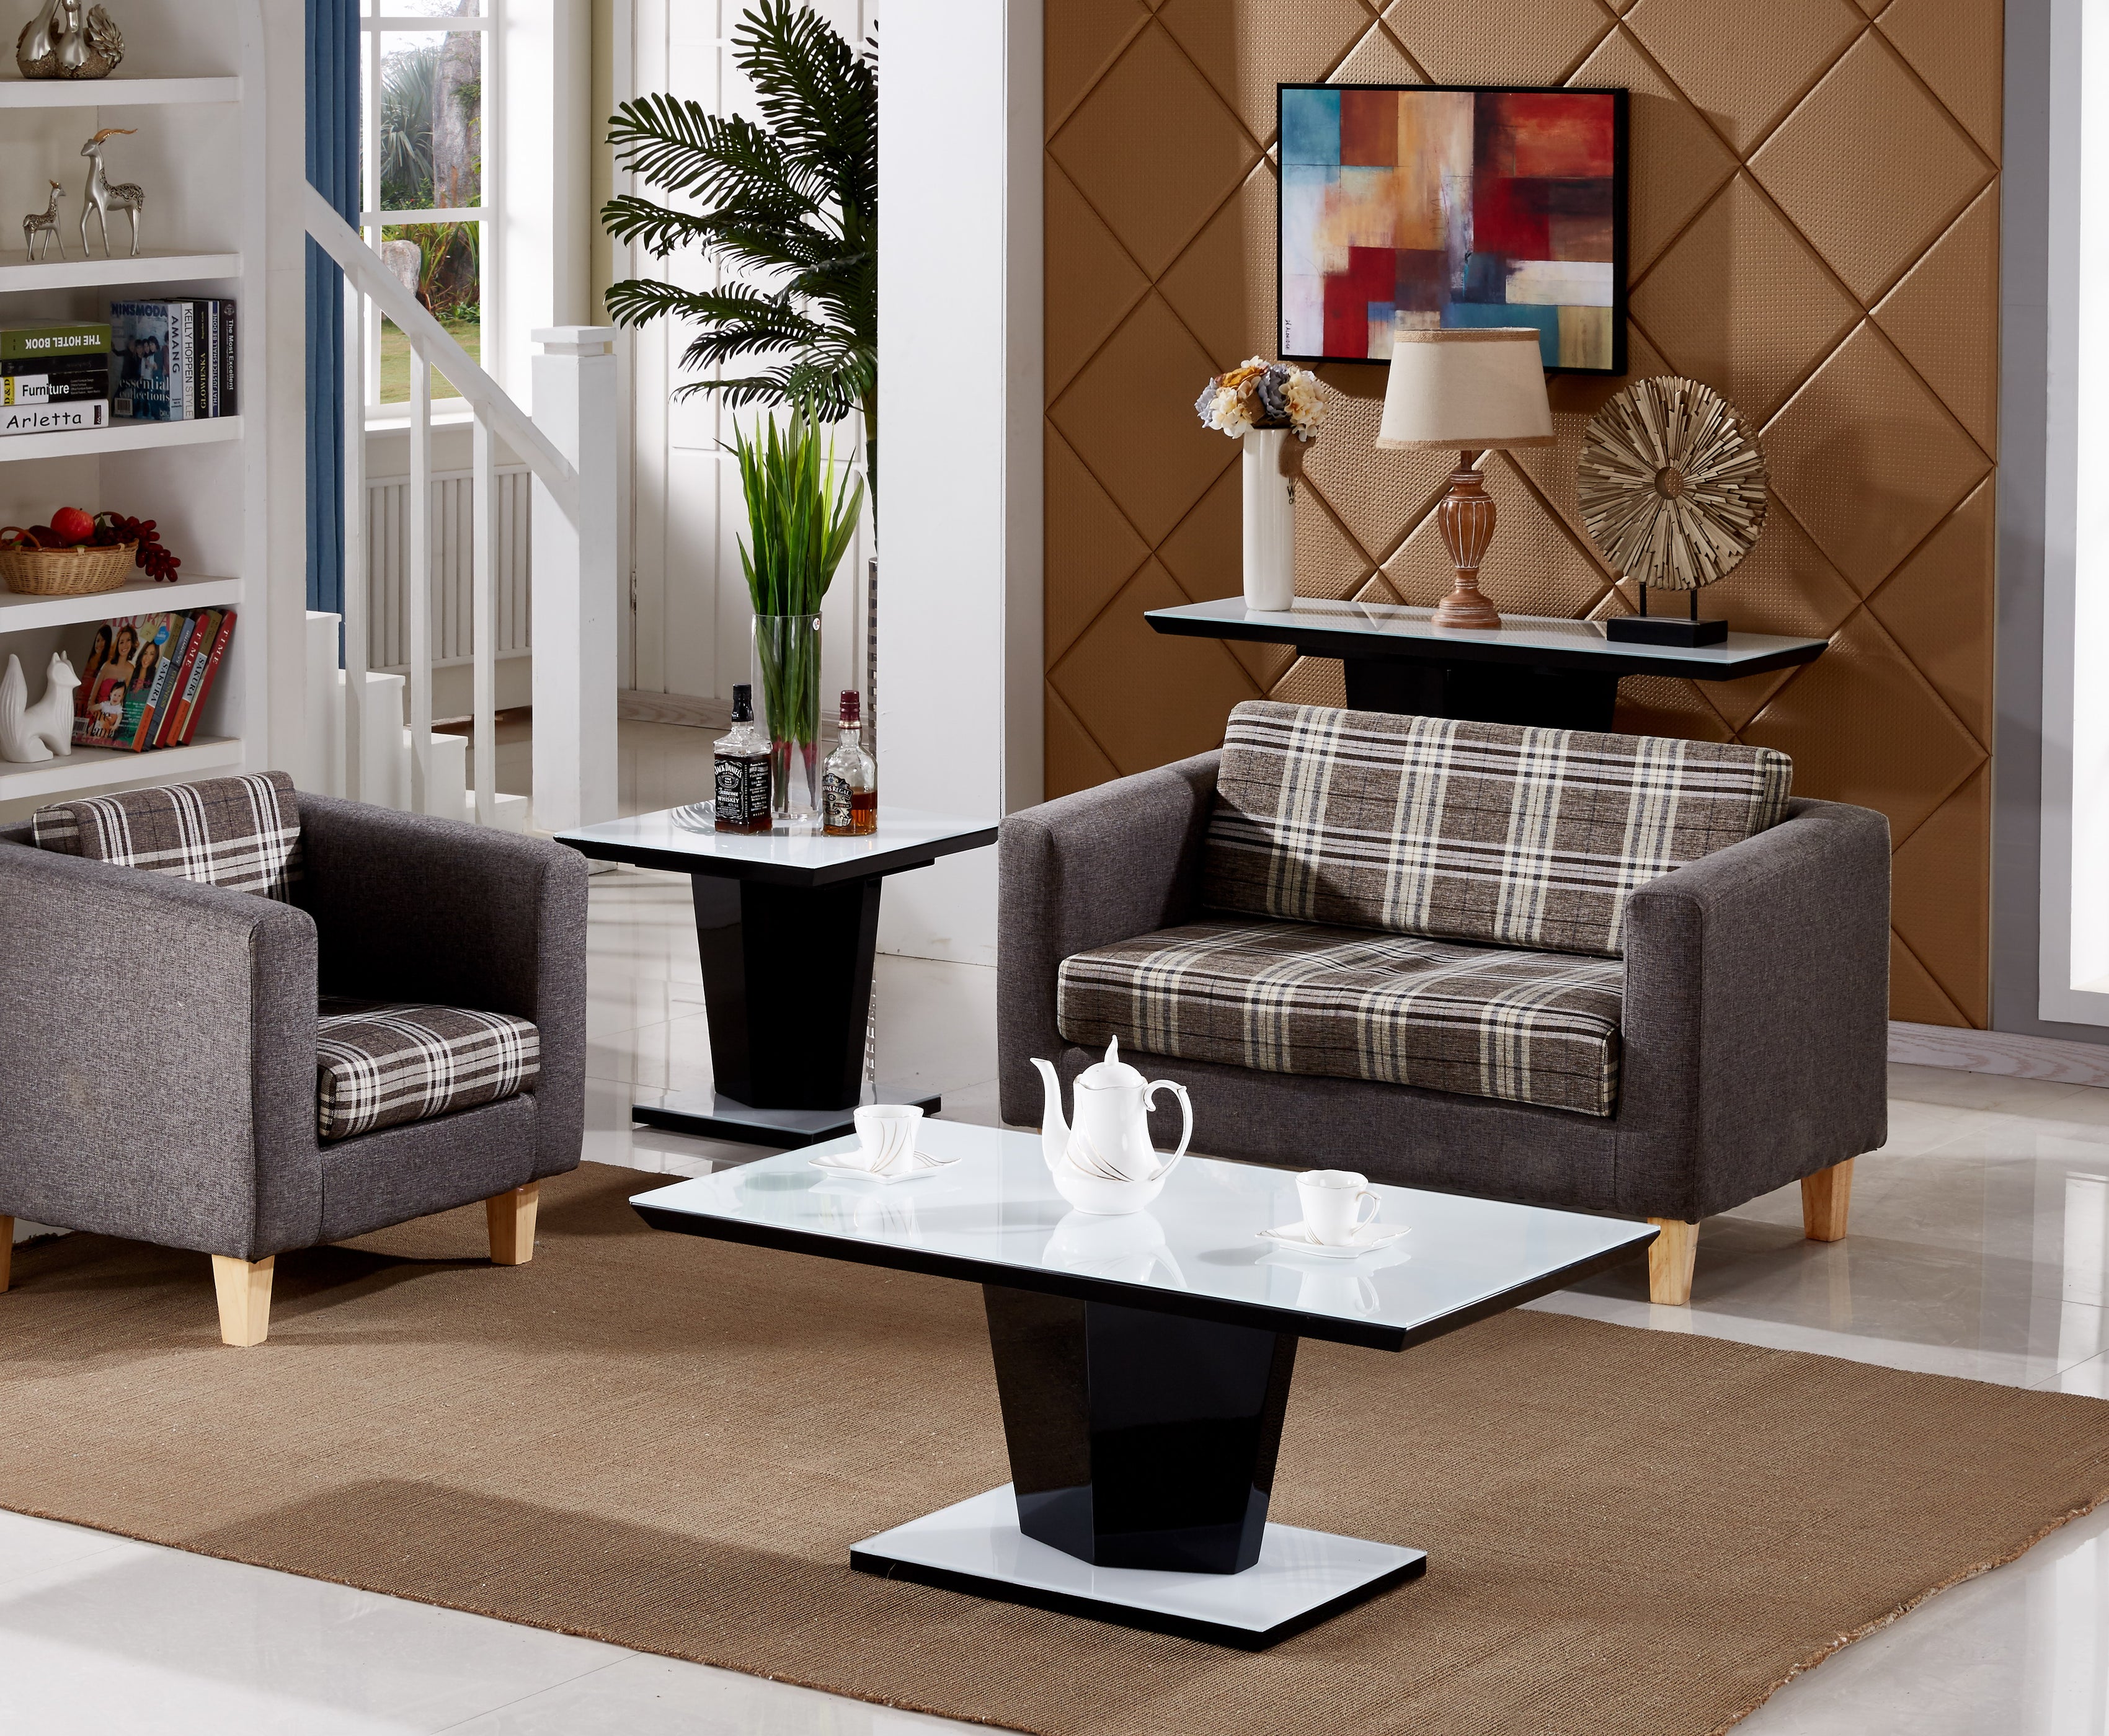 New International Furniture Kitchener for Living room